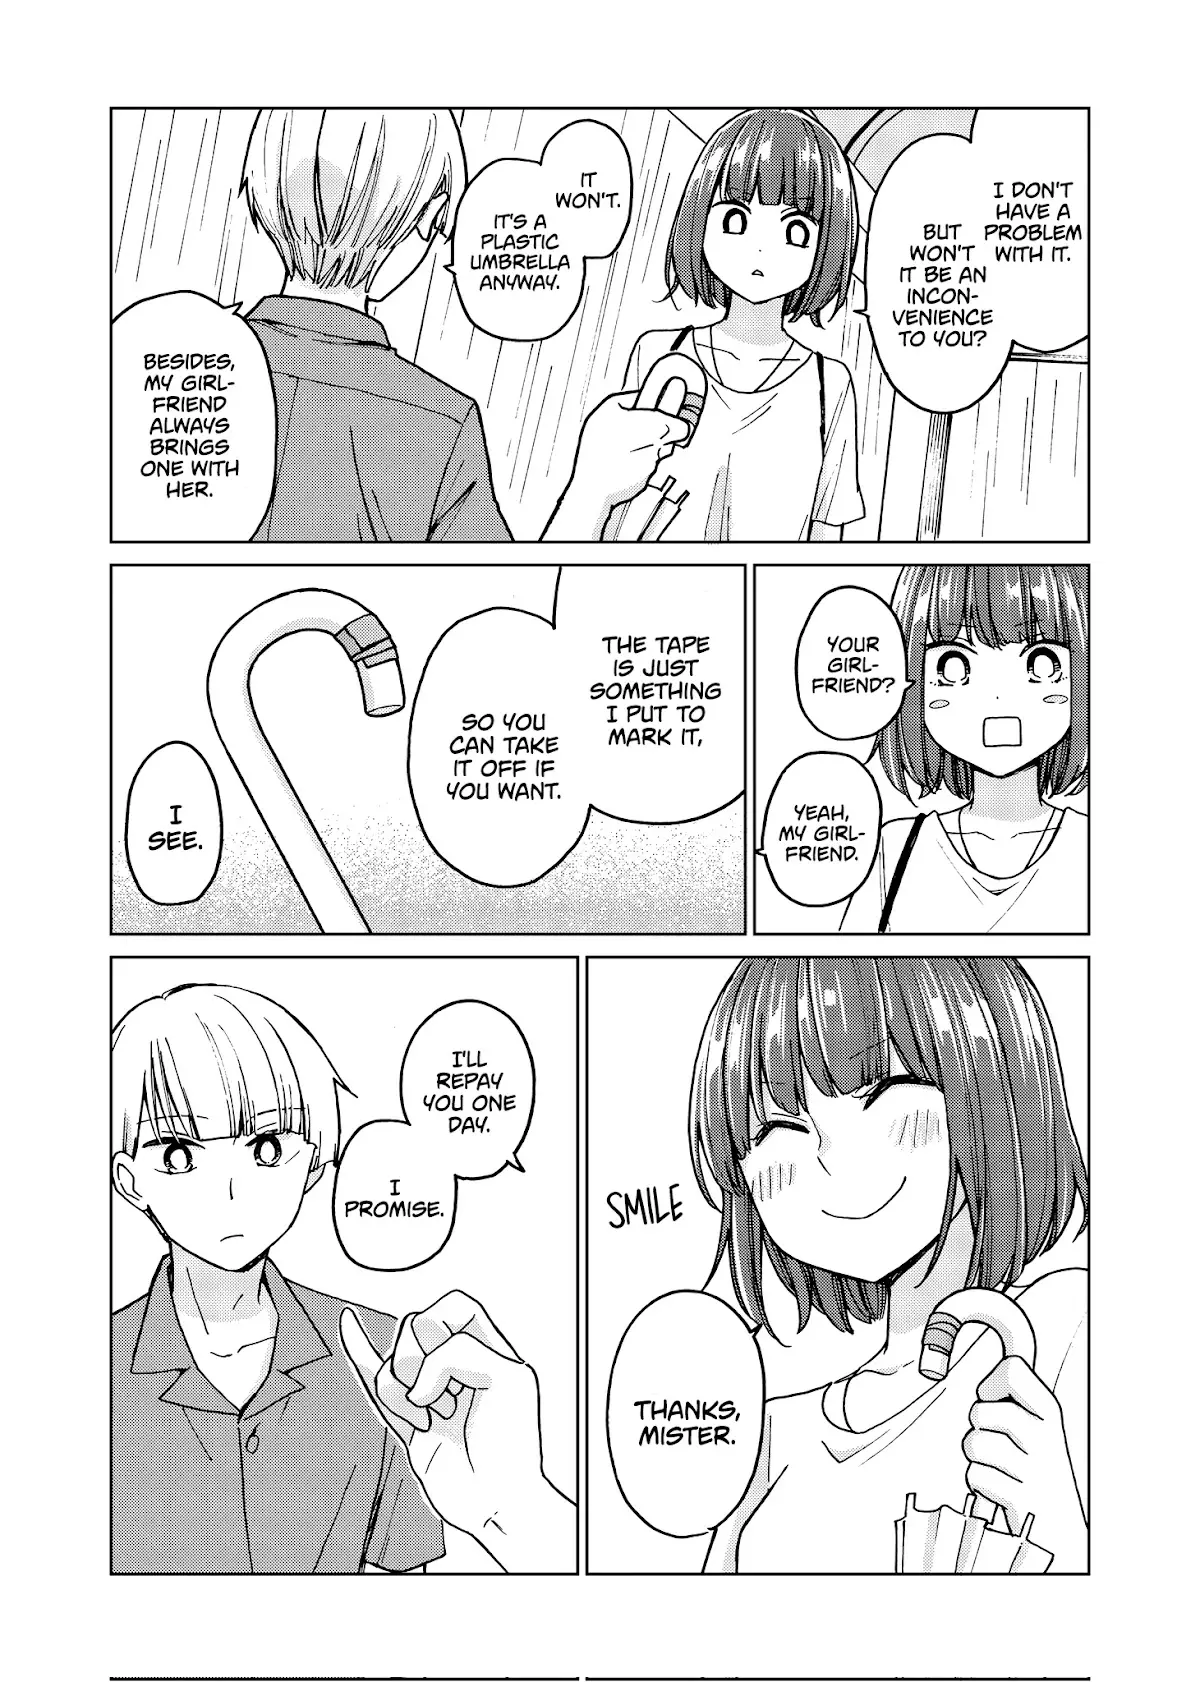 Hanazono And Kazoe's Bizzare After School Rendezvous - 34 page 4-92cd4193